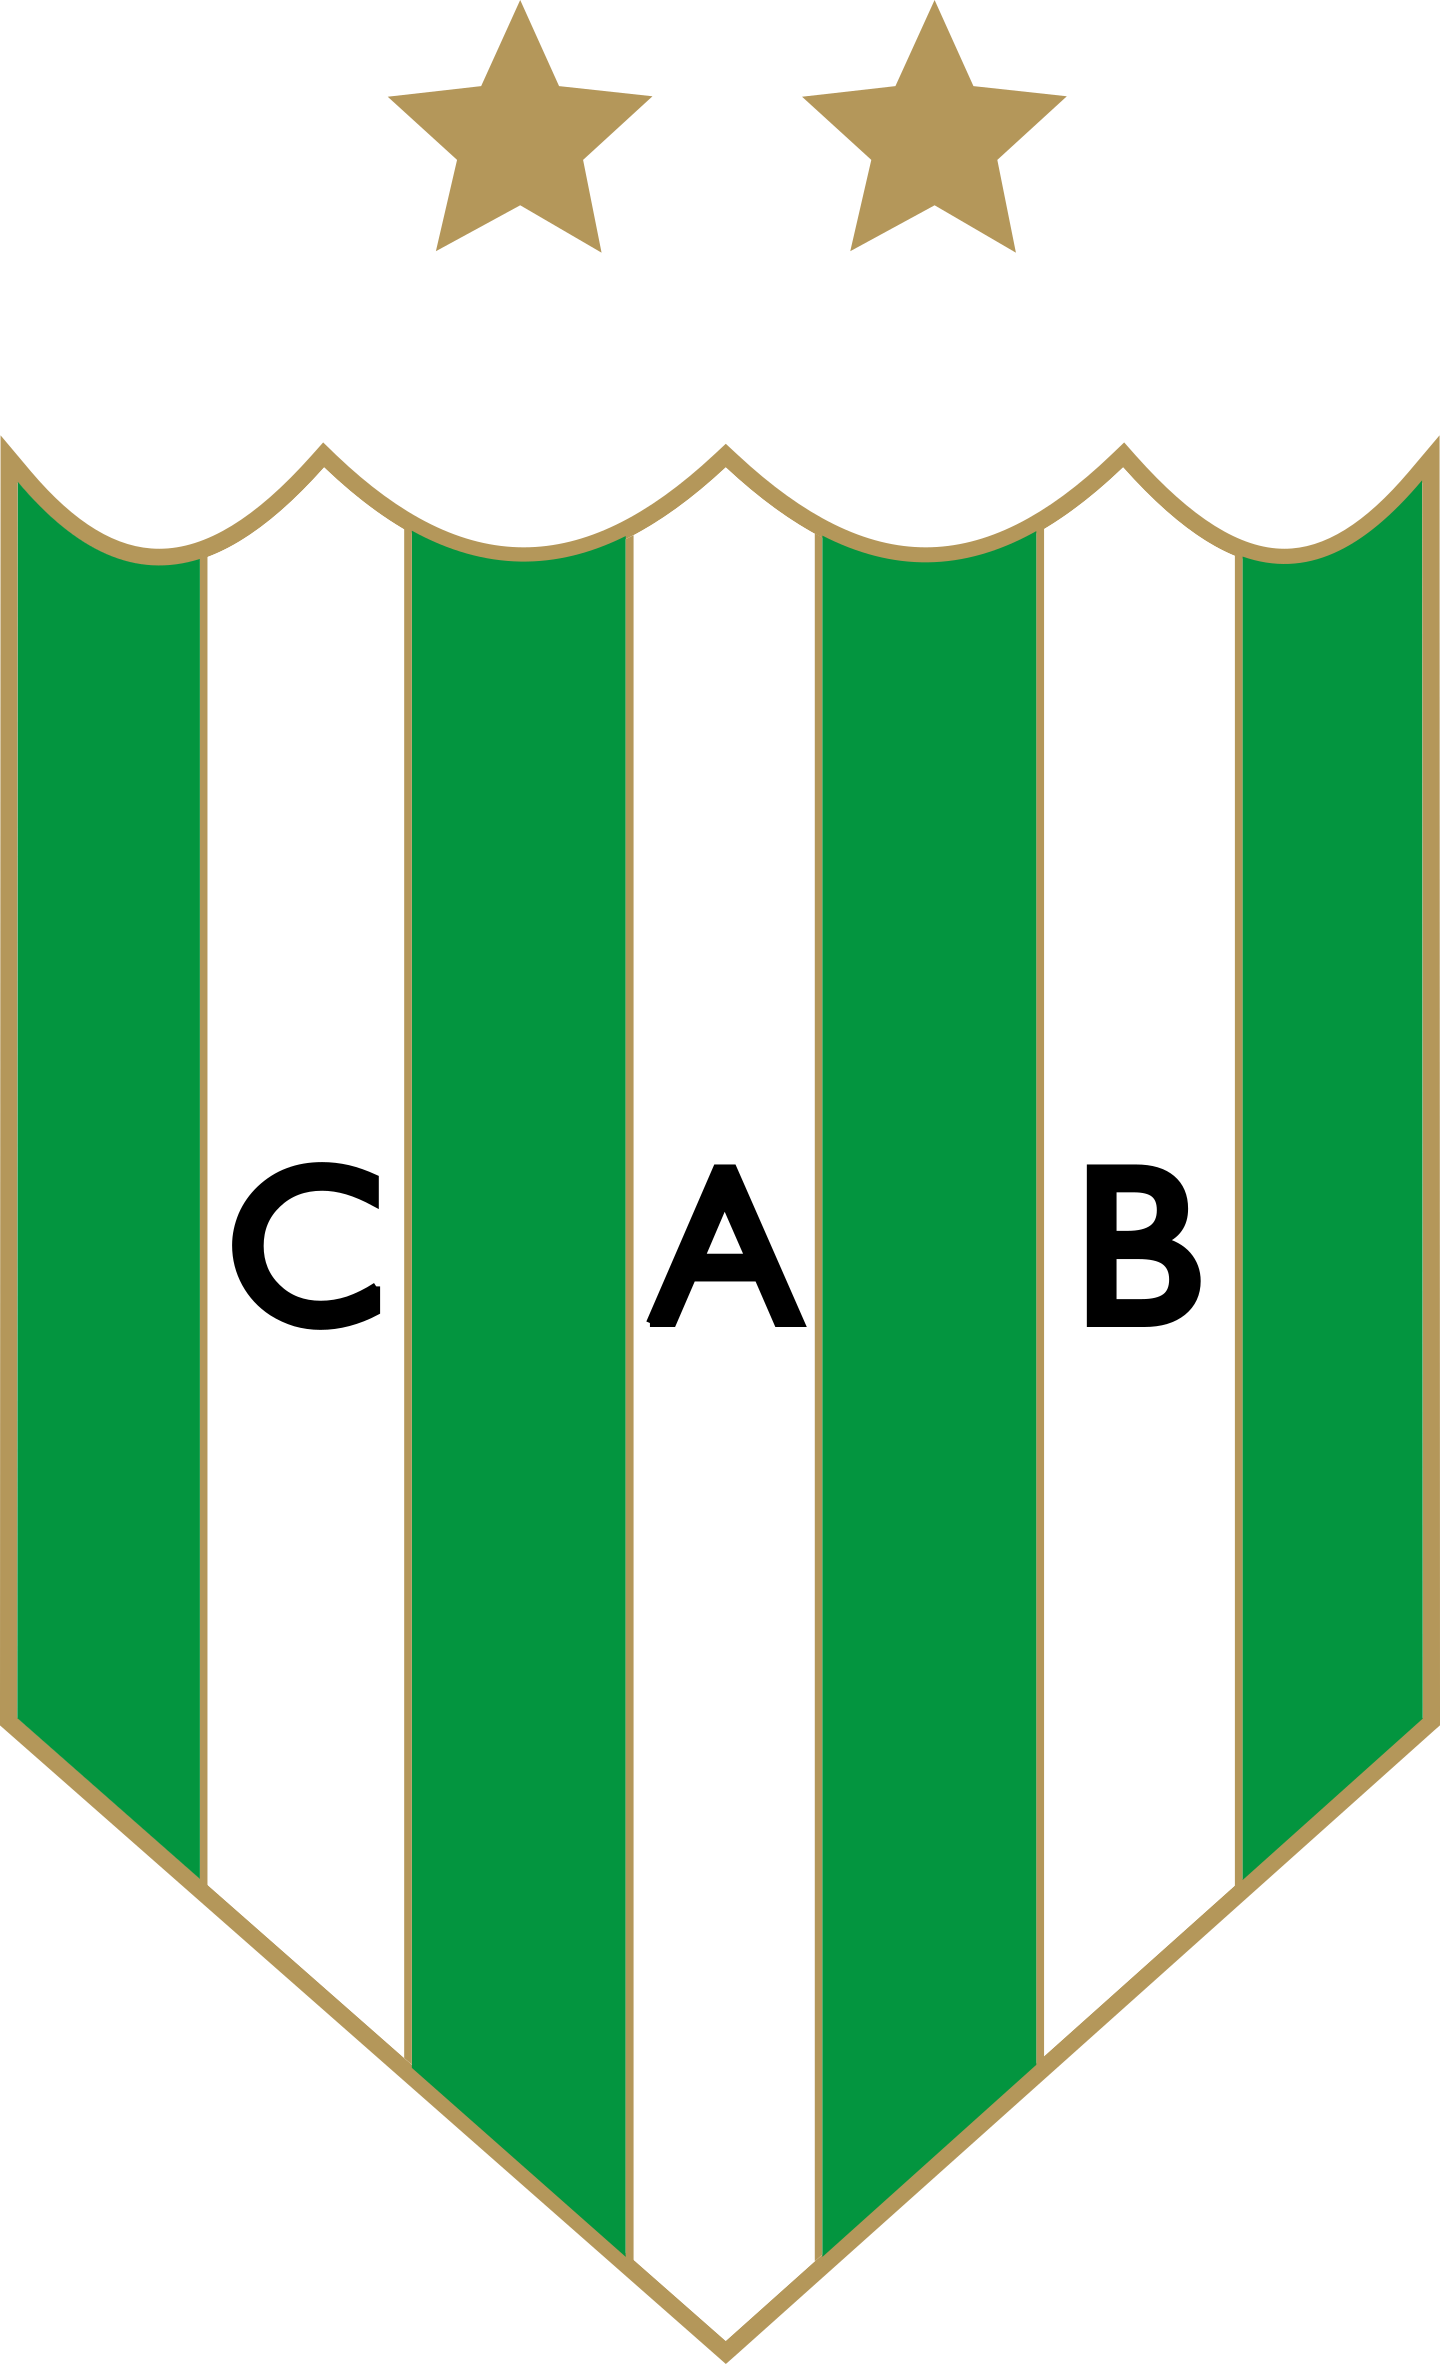 banfield logo 3 - Club Atlético Banfield Logo